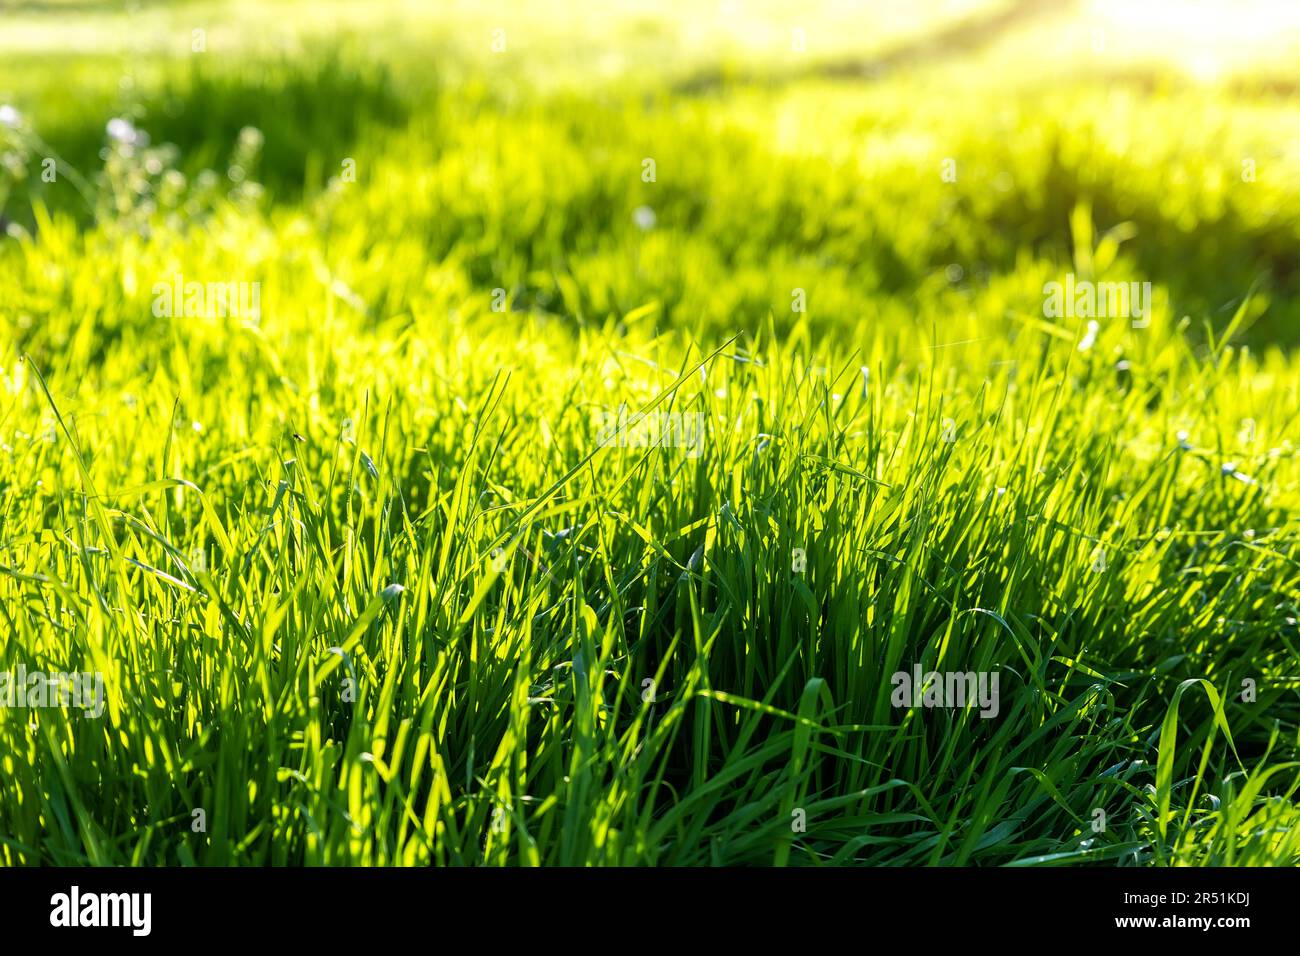 Closeup detail view of fresh long green grass field meadow in warm sunset sunrise morning sun light. Abstrackt natural gardrn environment background Stock Photo